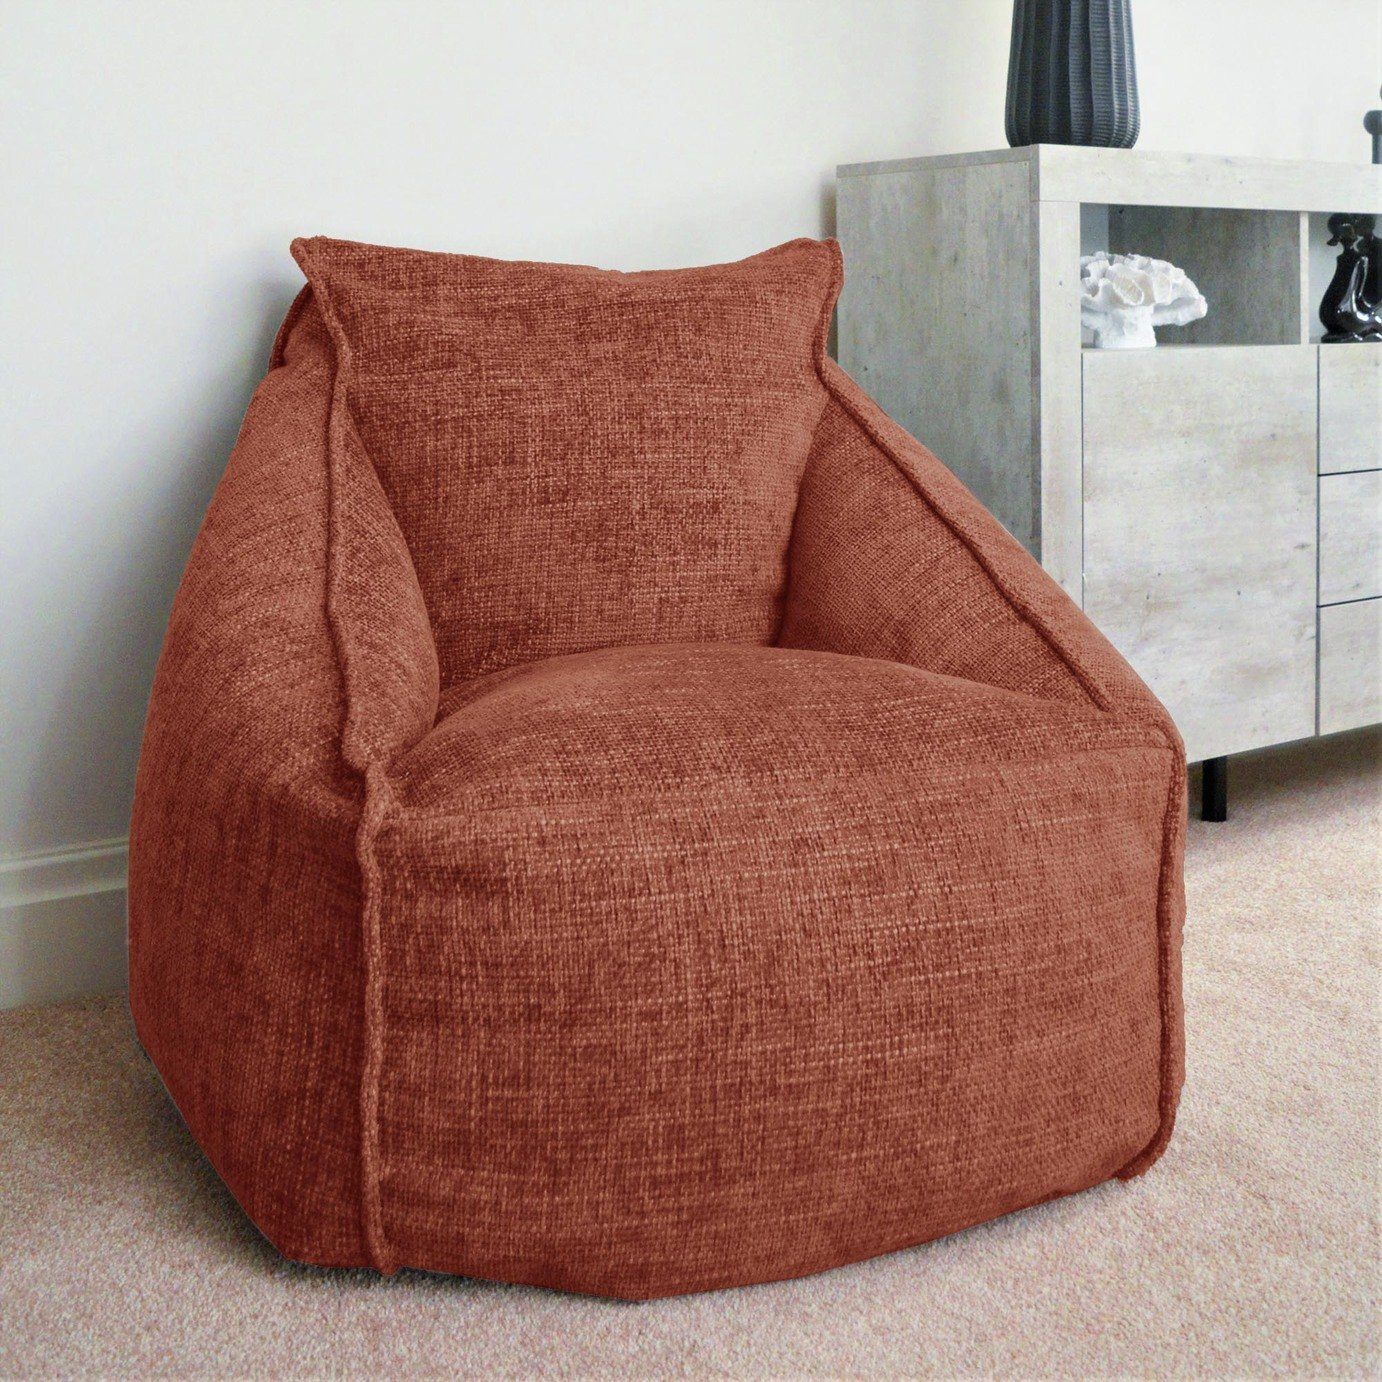 rucomfy Fabric Bean Bag Chair - Burnt Orange - image 1